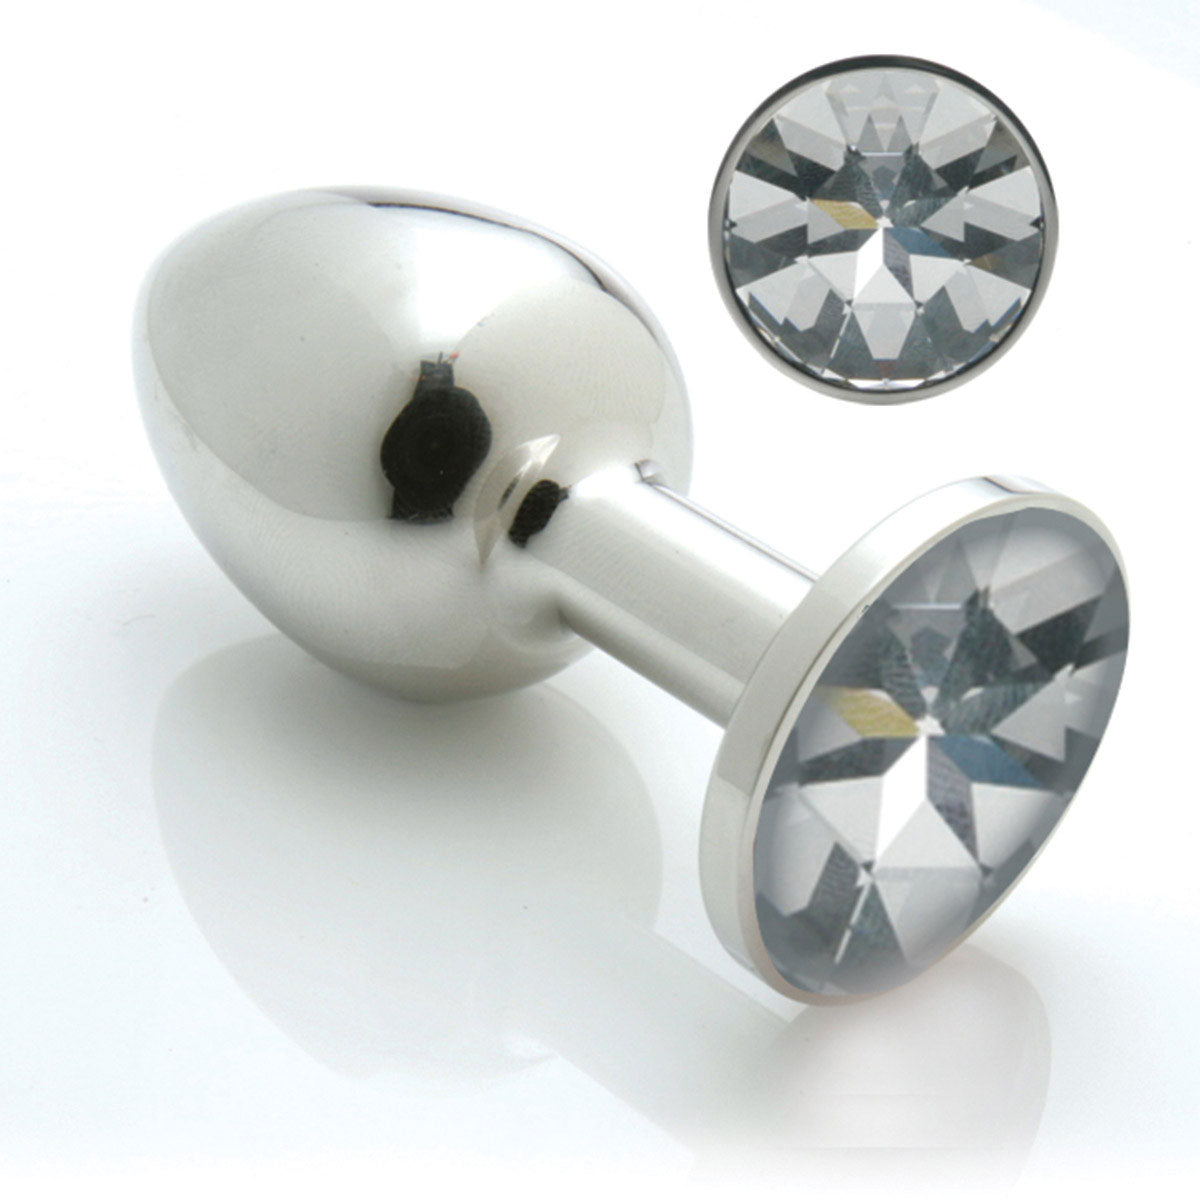 Pretty Plugs Stainless Steel Butt Plug w/ Swarovski Crystal - Large Crystal Clear